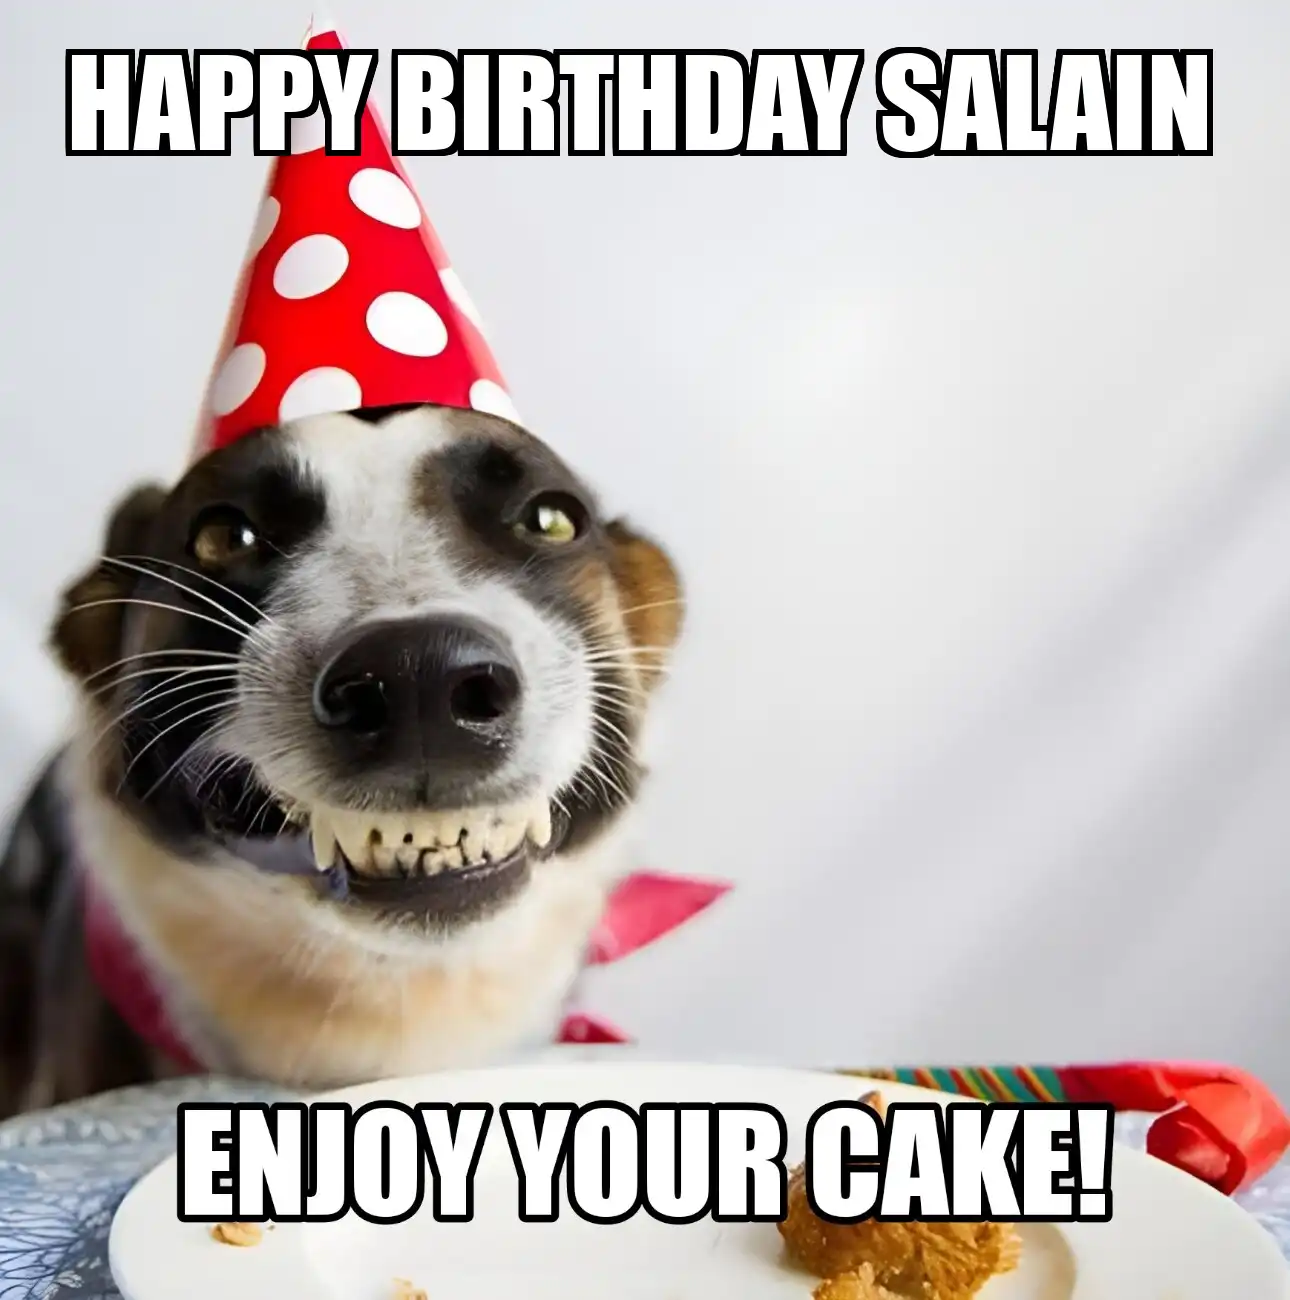 Happy Birthday Salain Enjoy Your Cake Dog Meme